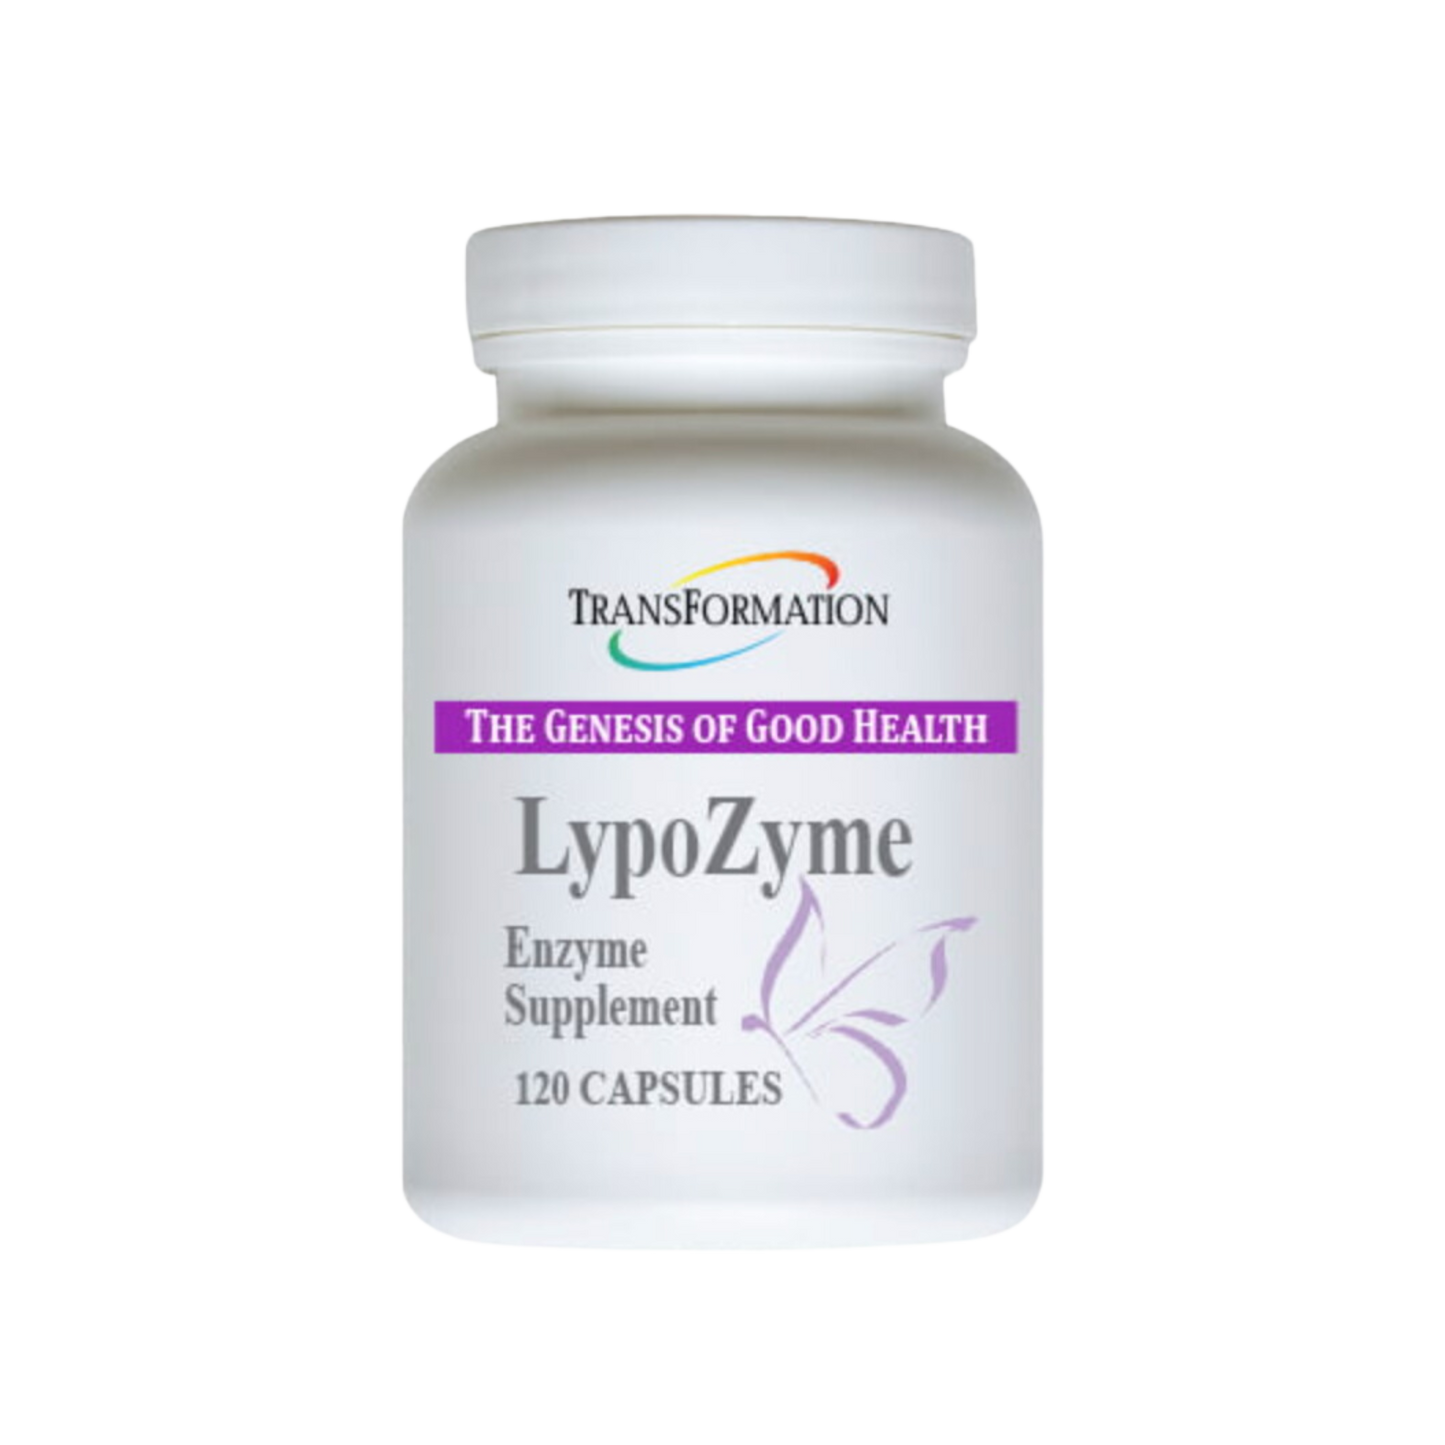 Transformation LypoZyme Capsules